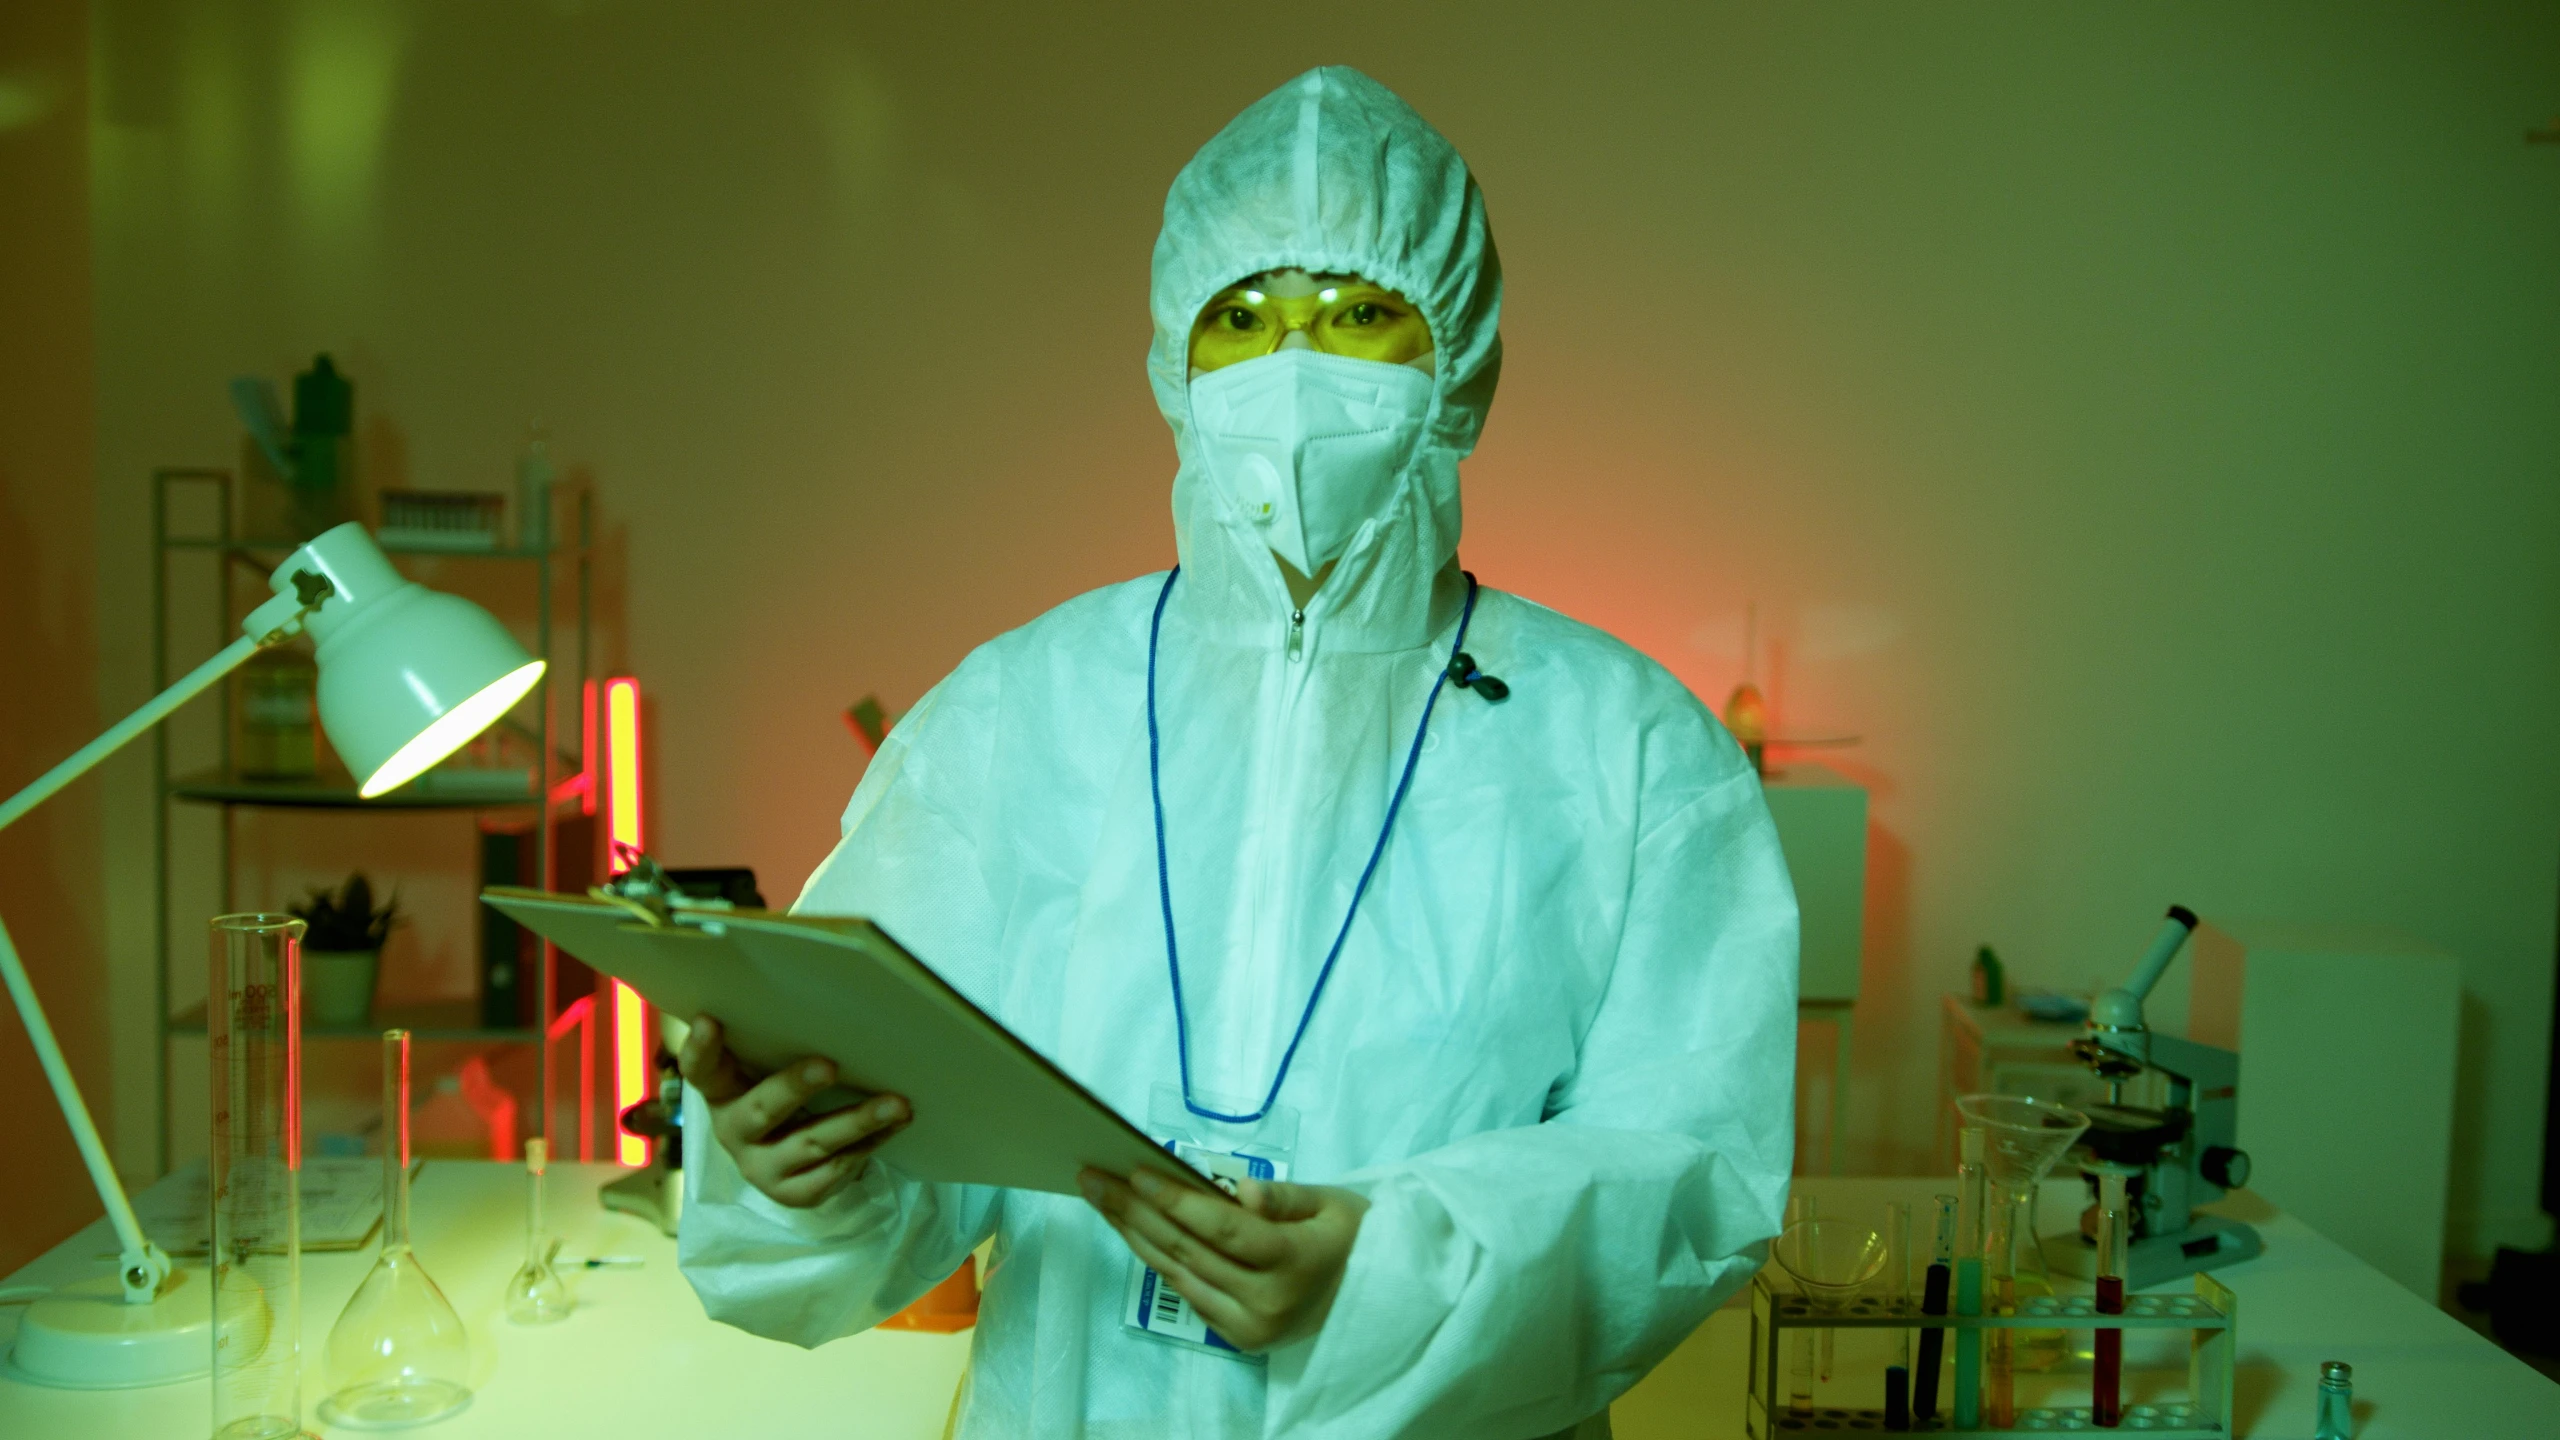 a man in a lab coat holding a clipboard, pexels, holography, staff wearing hazmat suits, secret shady laboratory, bao pham, portrait photo